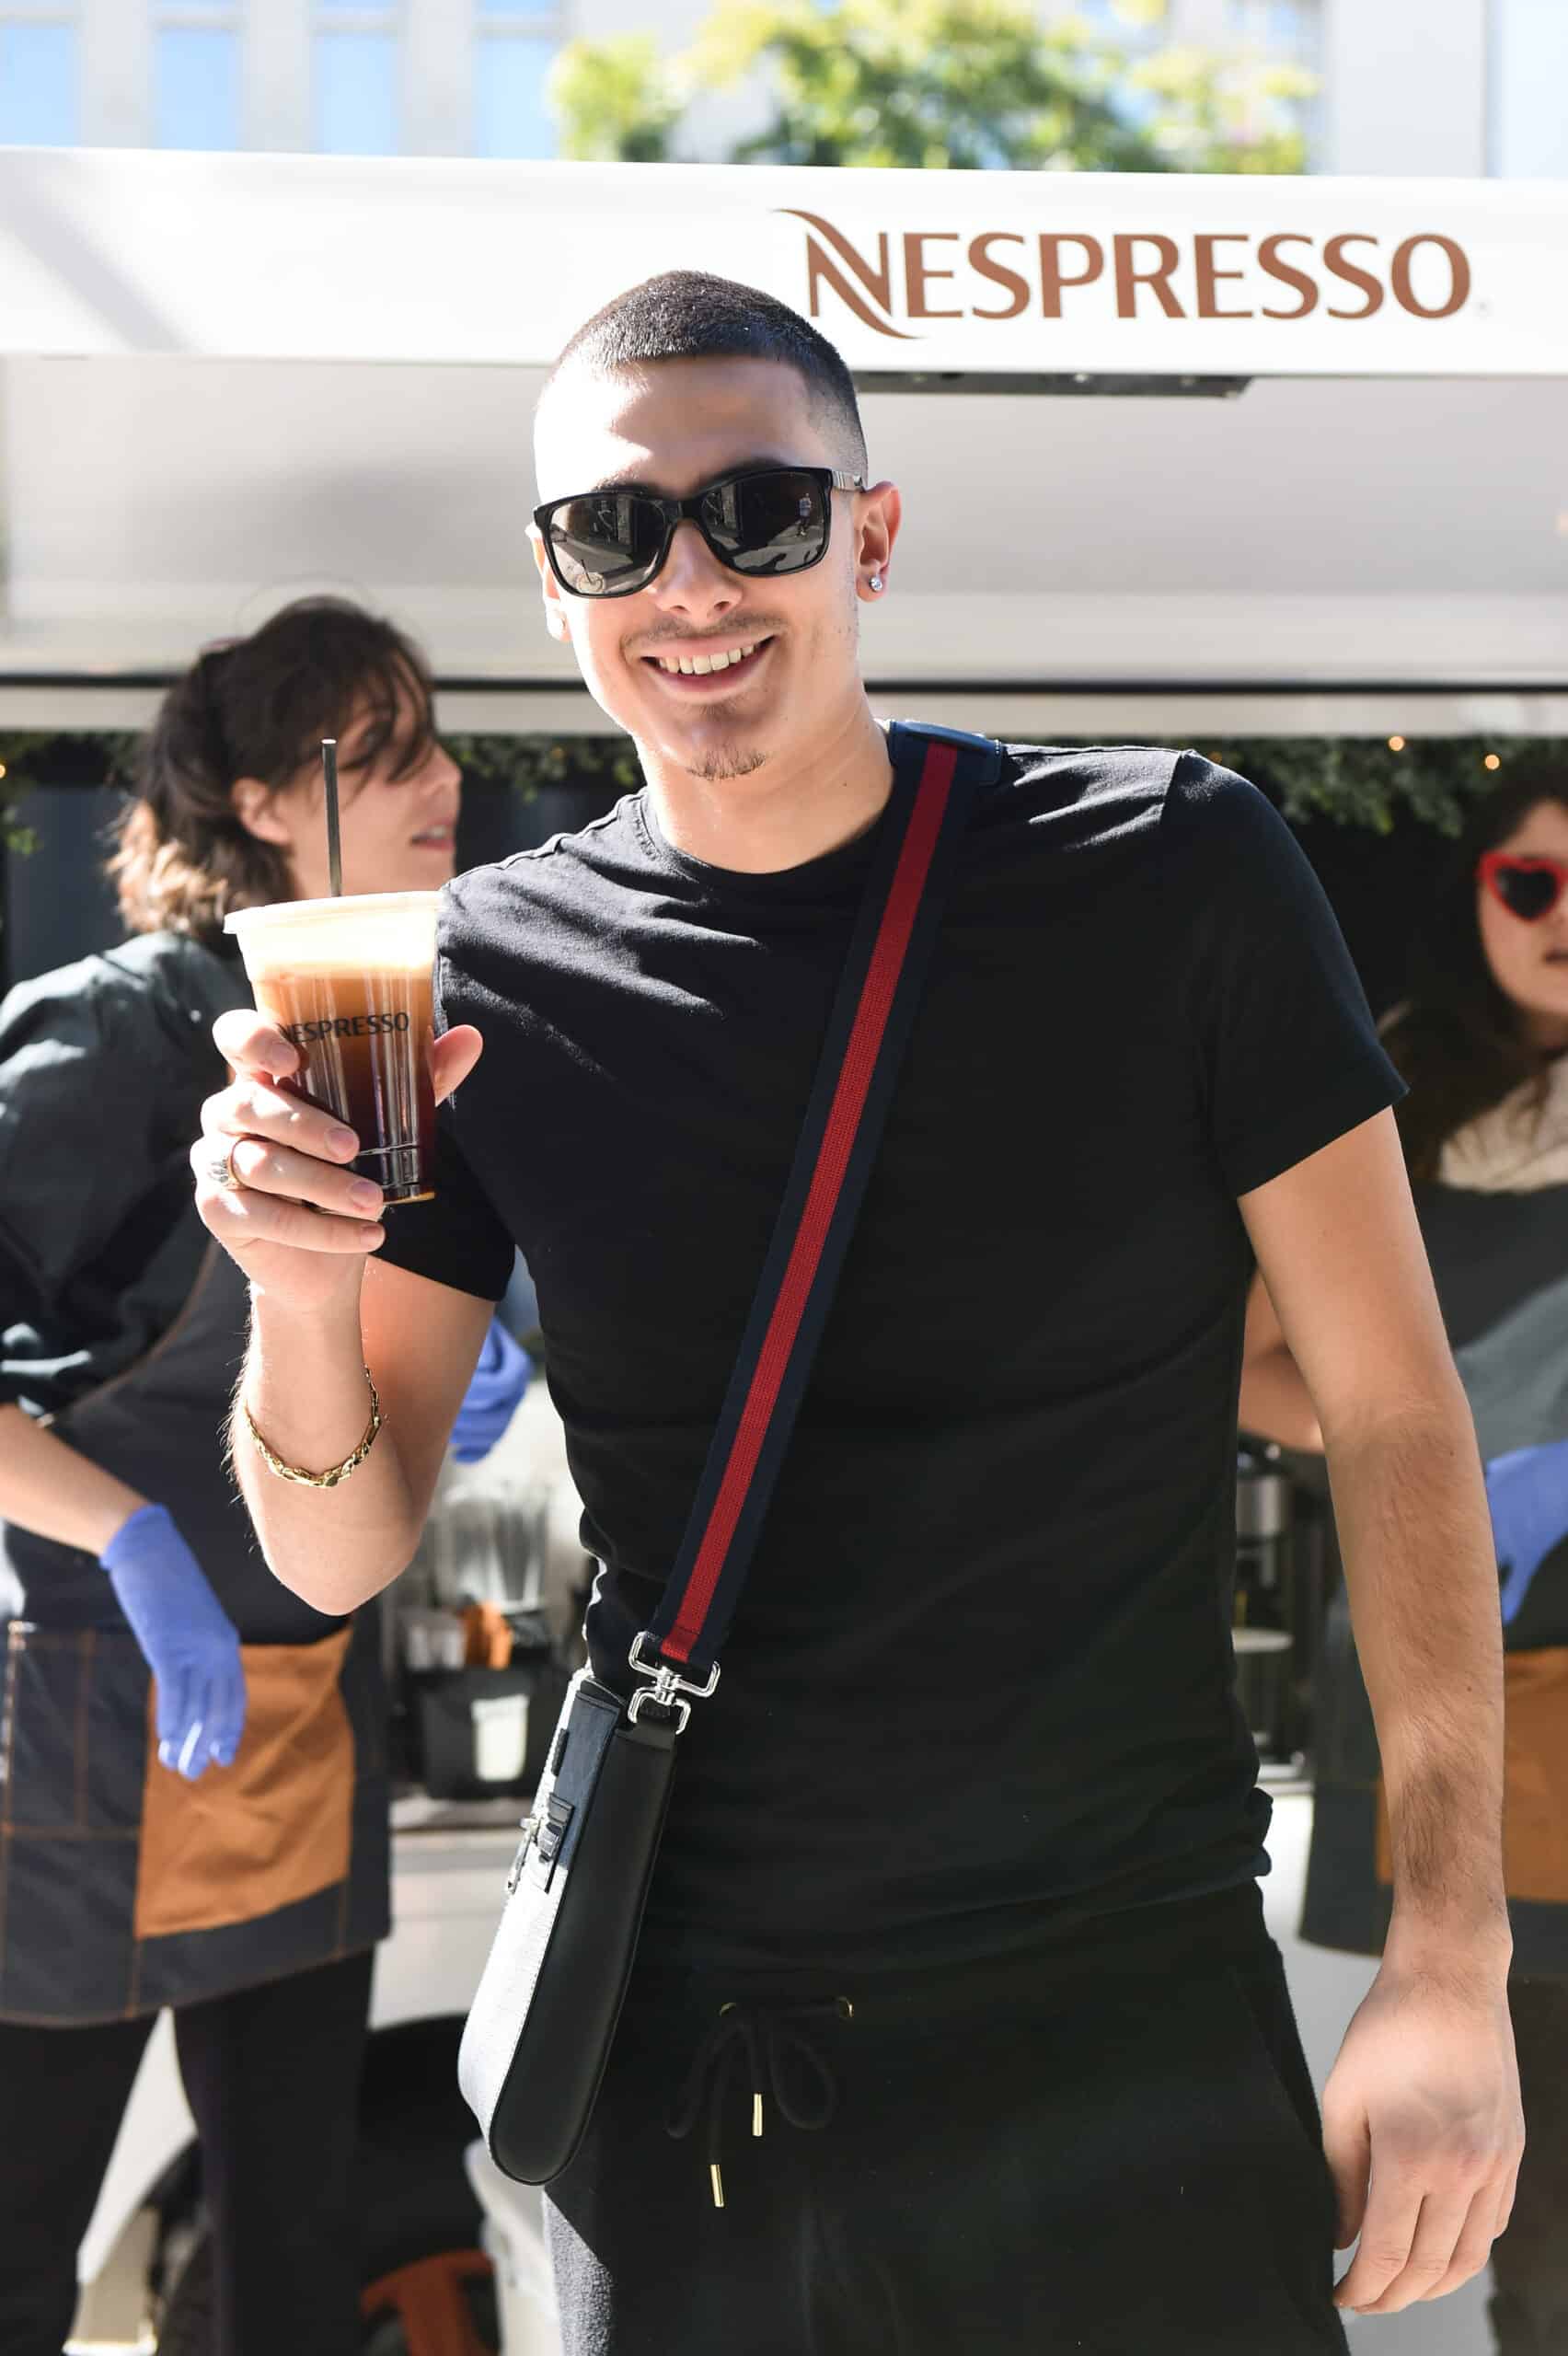 Man Holding Iced Nespresso Coffee